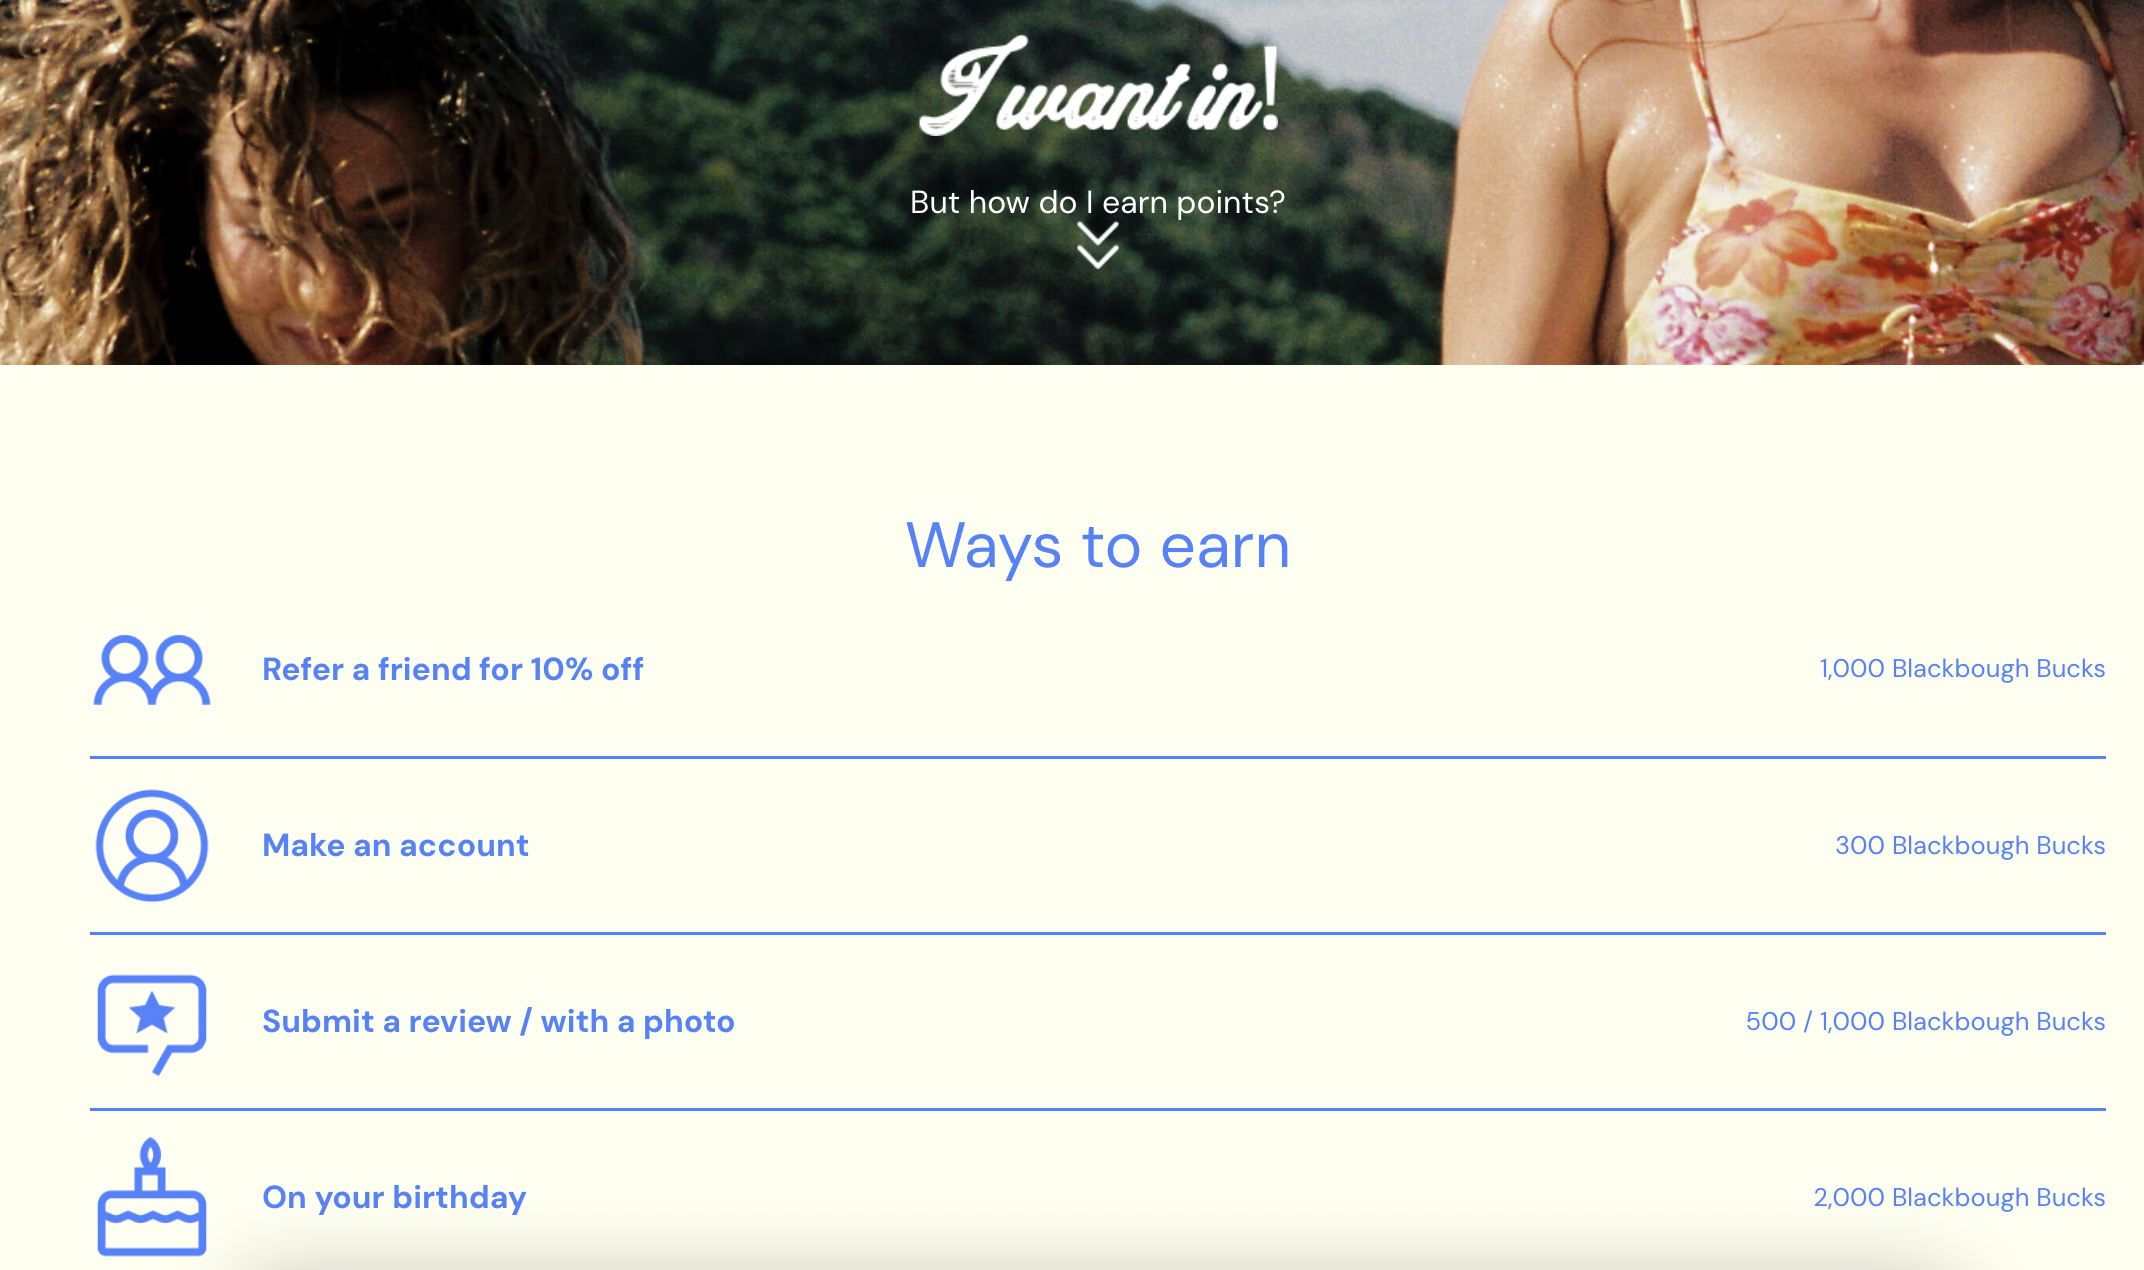 screenshot of blackbough swim rewards program page on ways to earn points